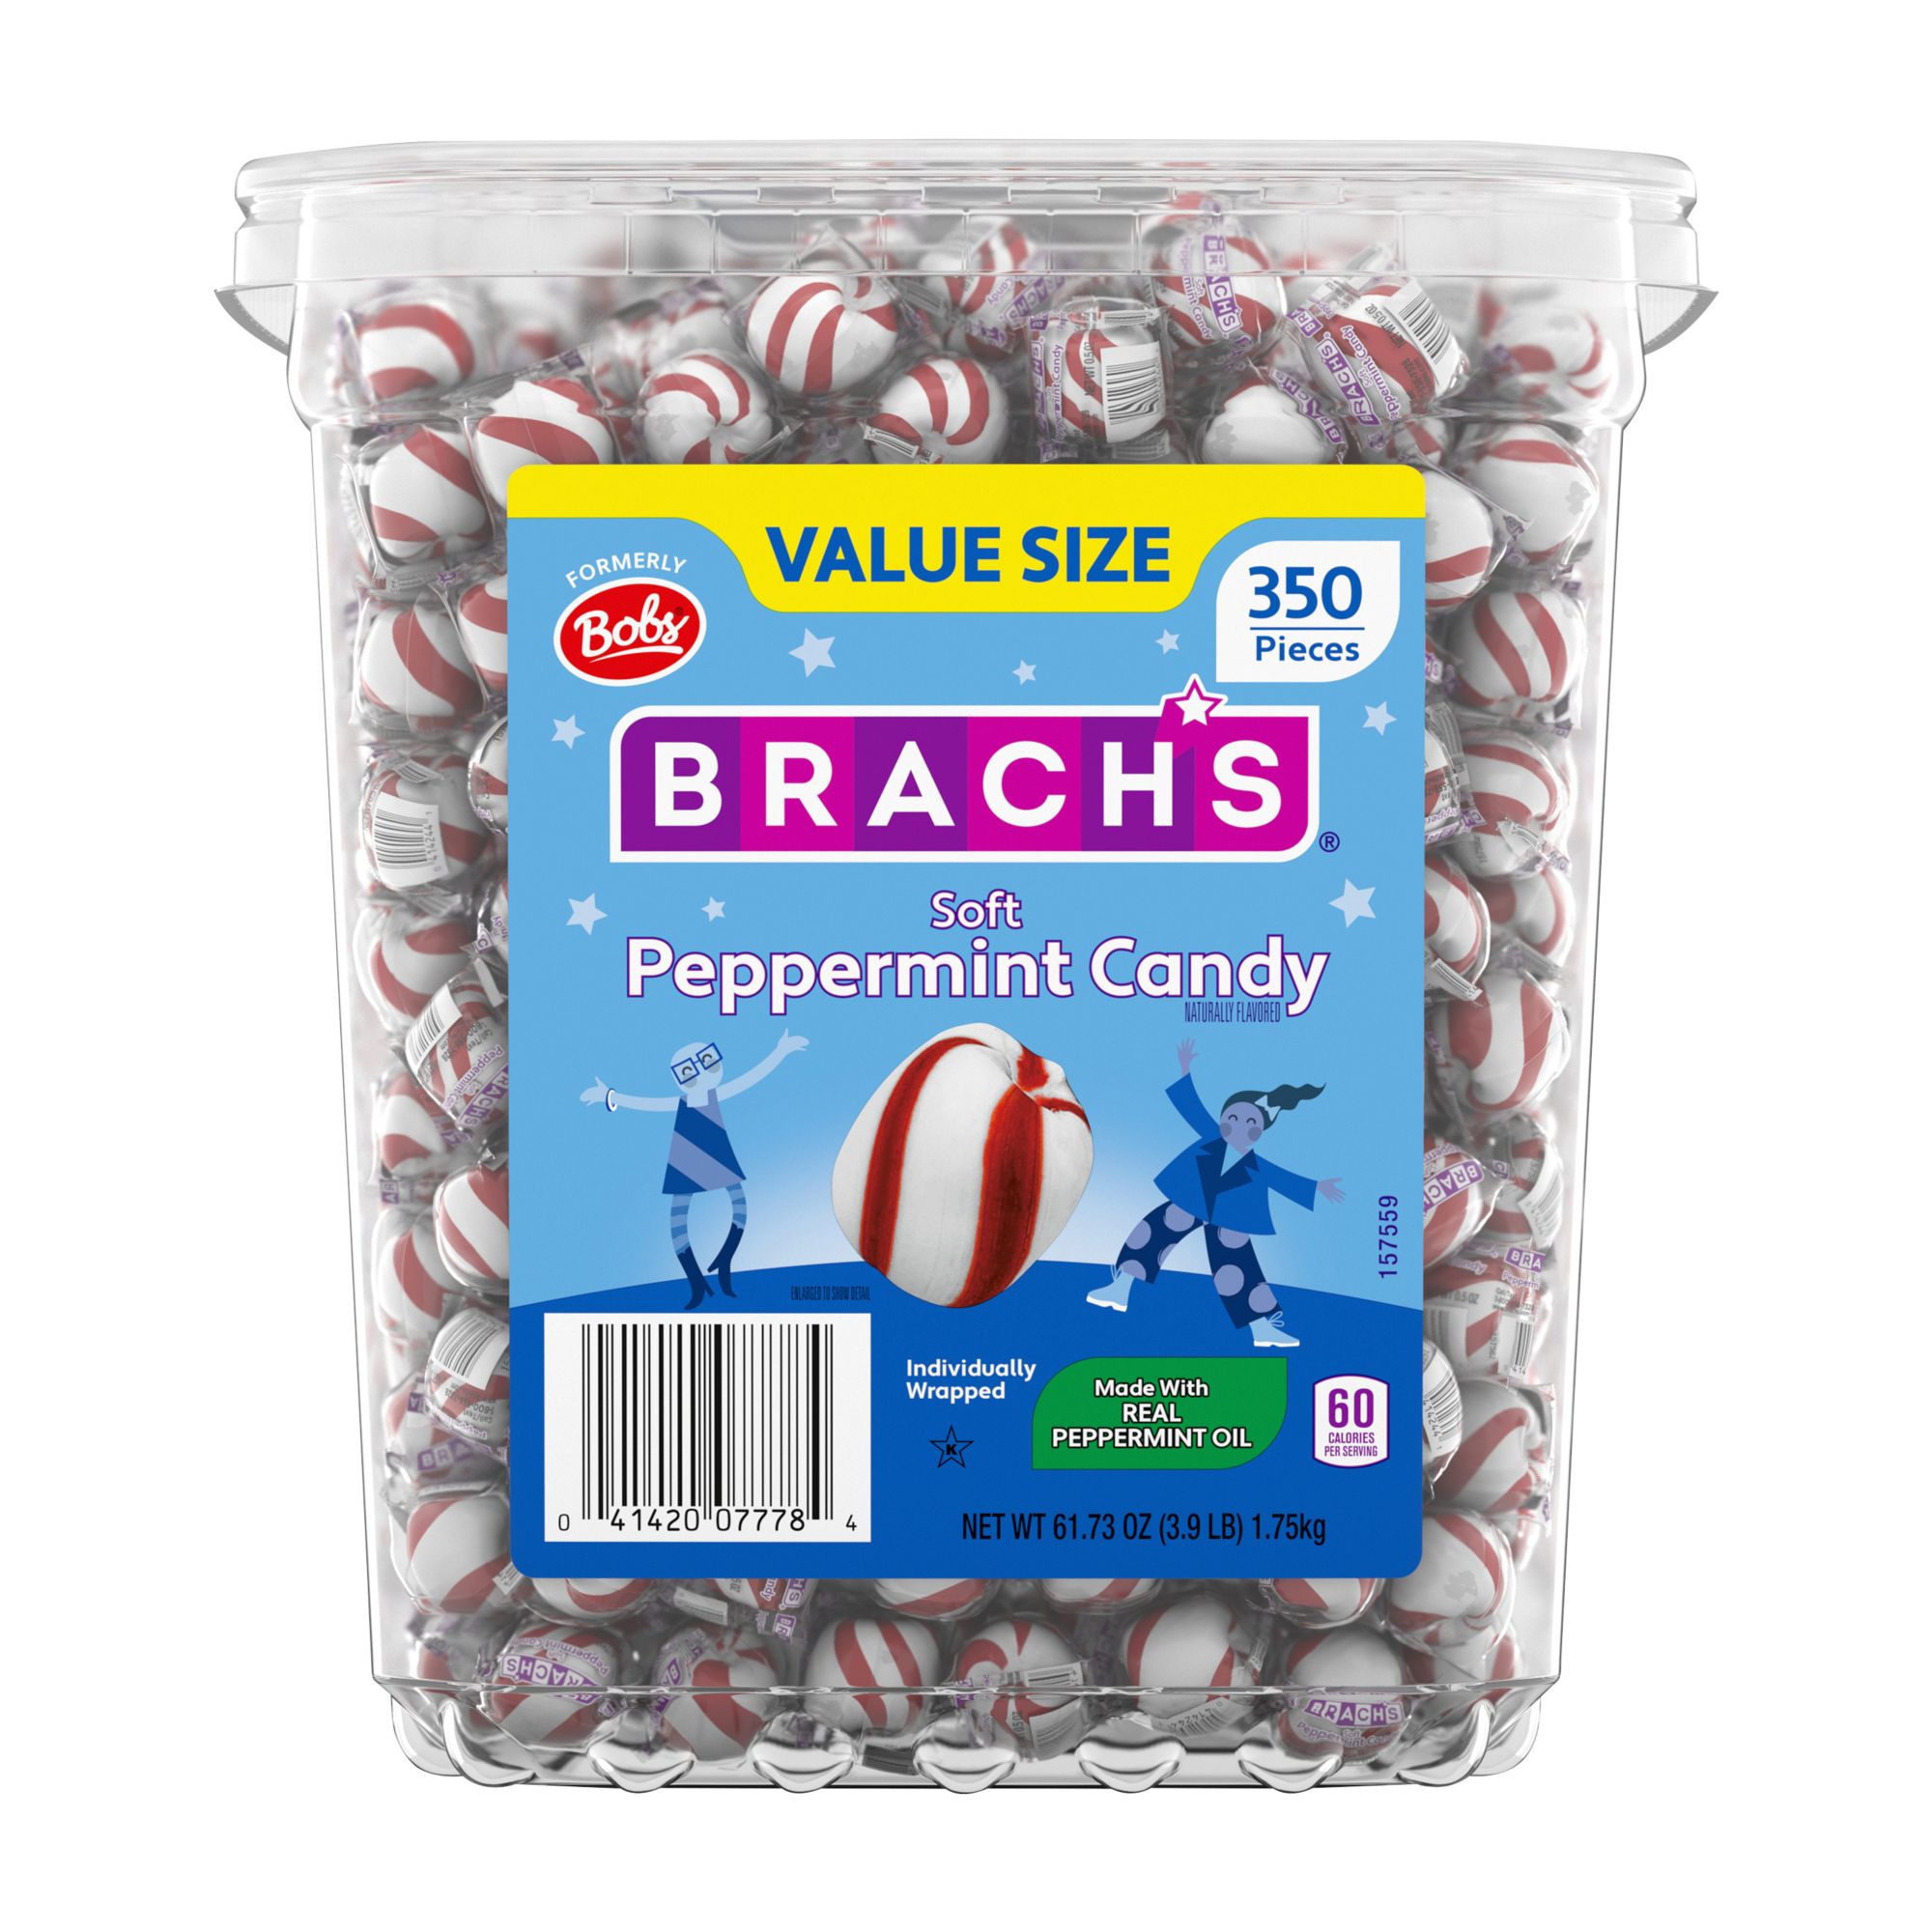 Brach's - It's sugar free season. What's your favorite flavor